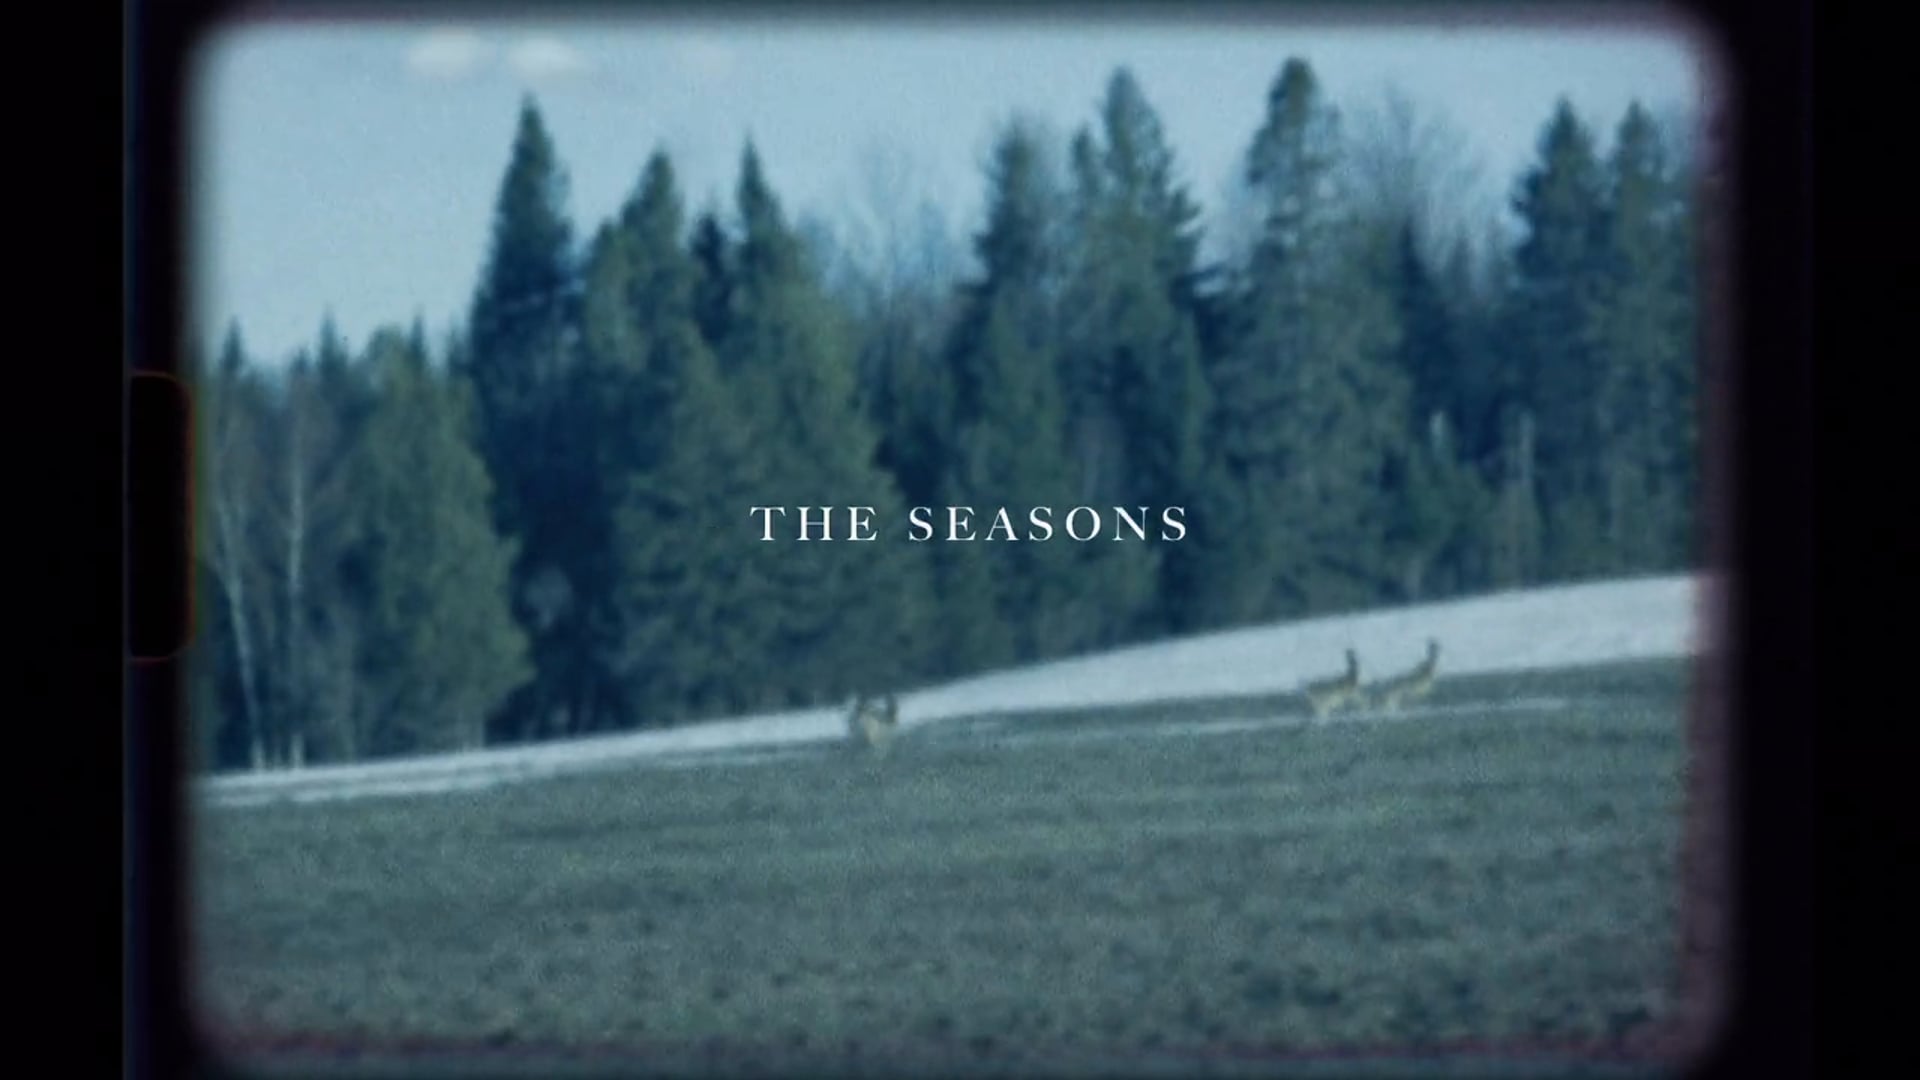 The Seasons - Apples